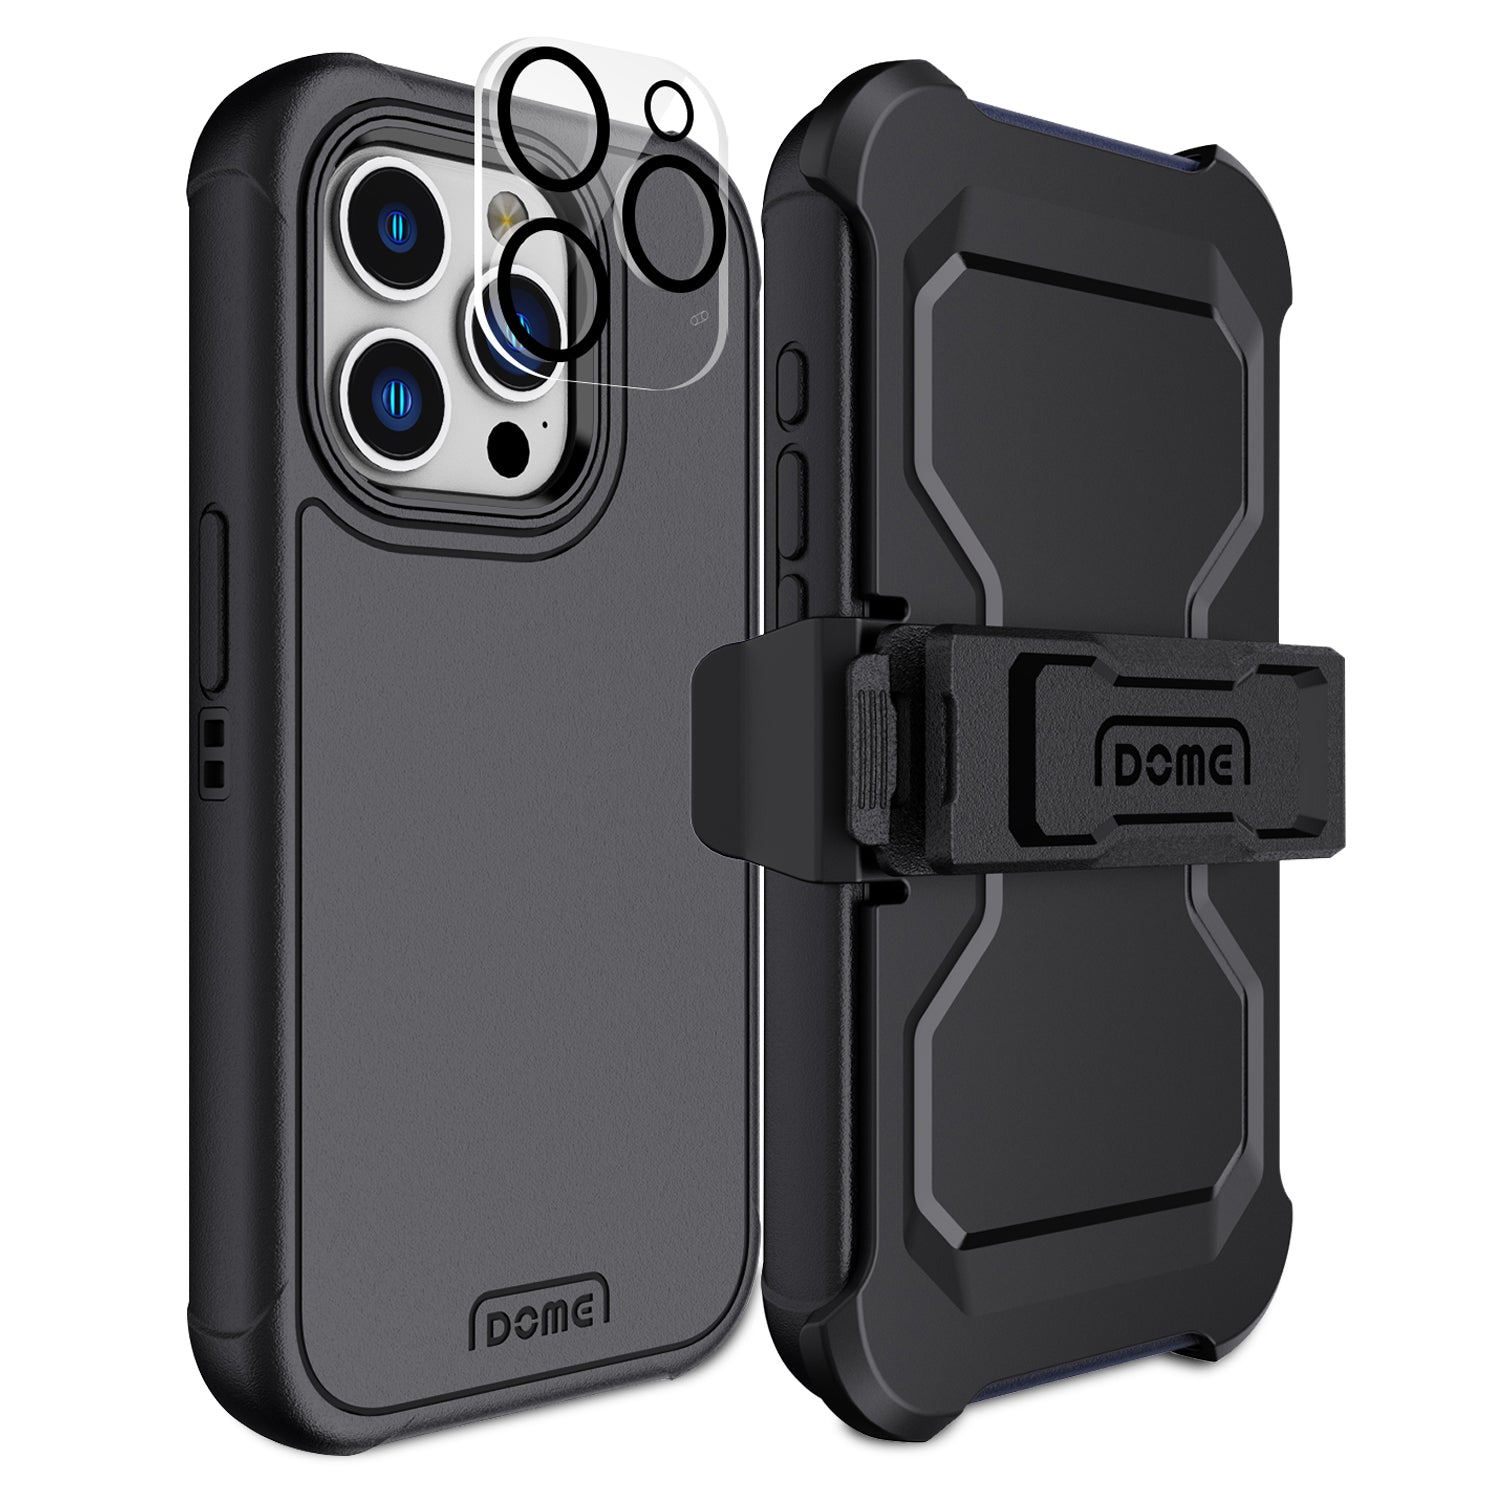 UV GEN] iPhone 15 Pro Max (2023) Hard Coated Film Screen Protector wi –  Whitestonedome